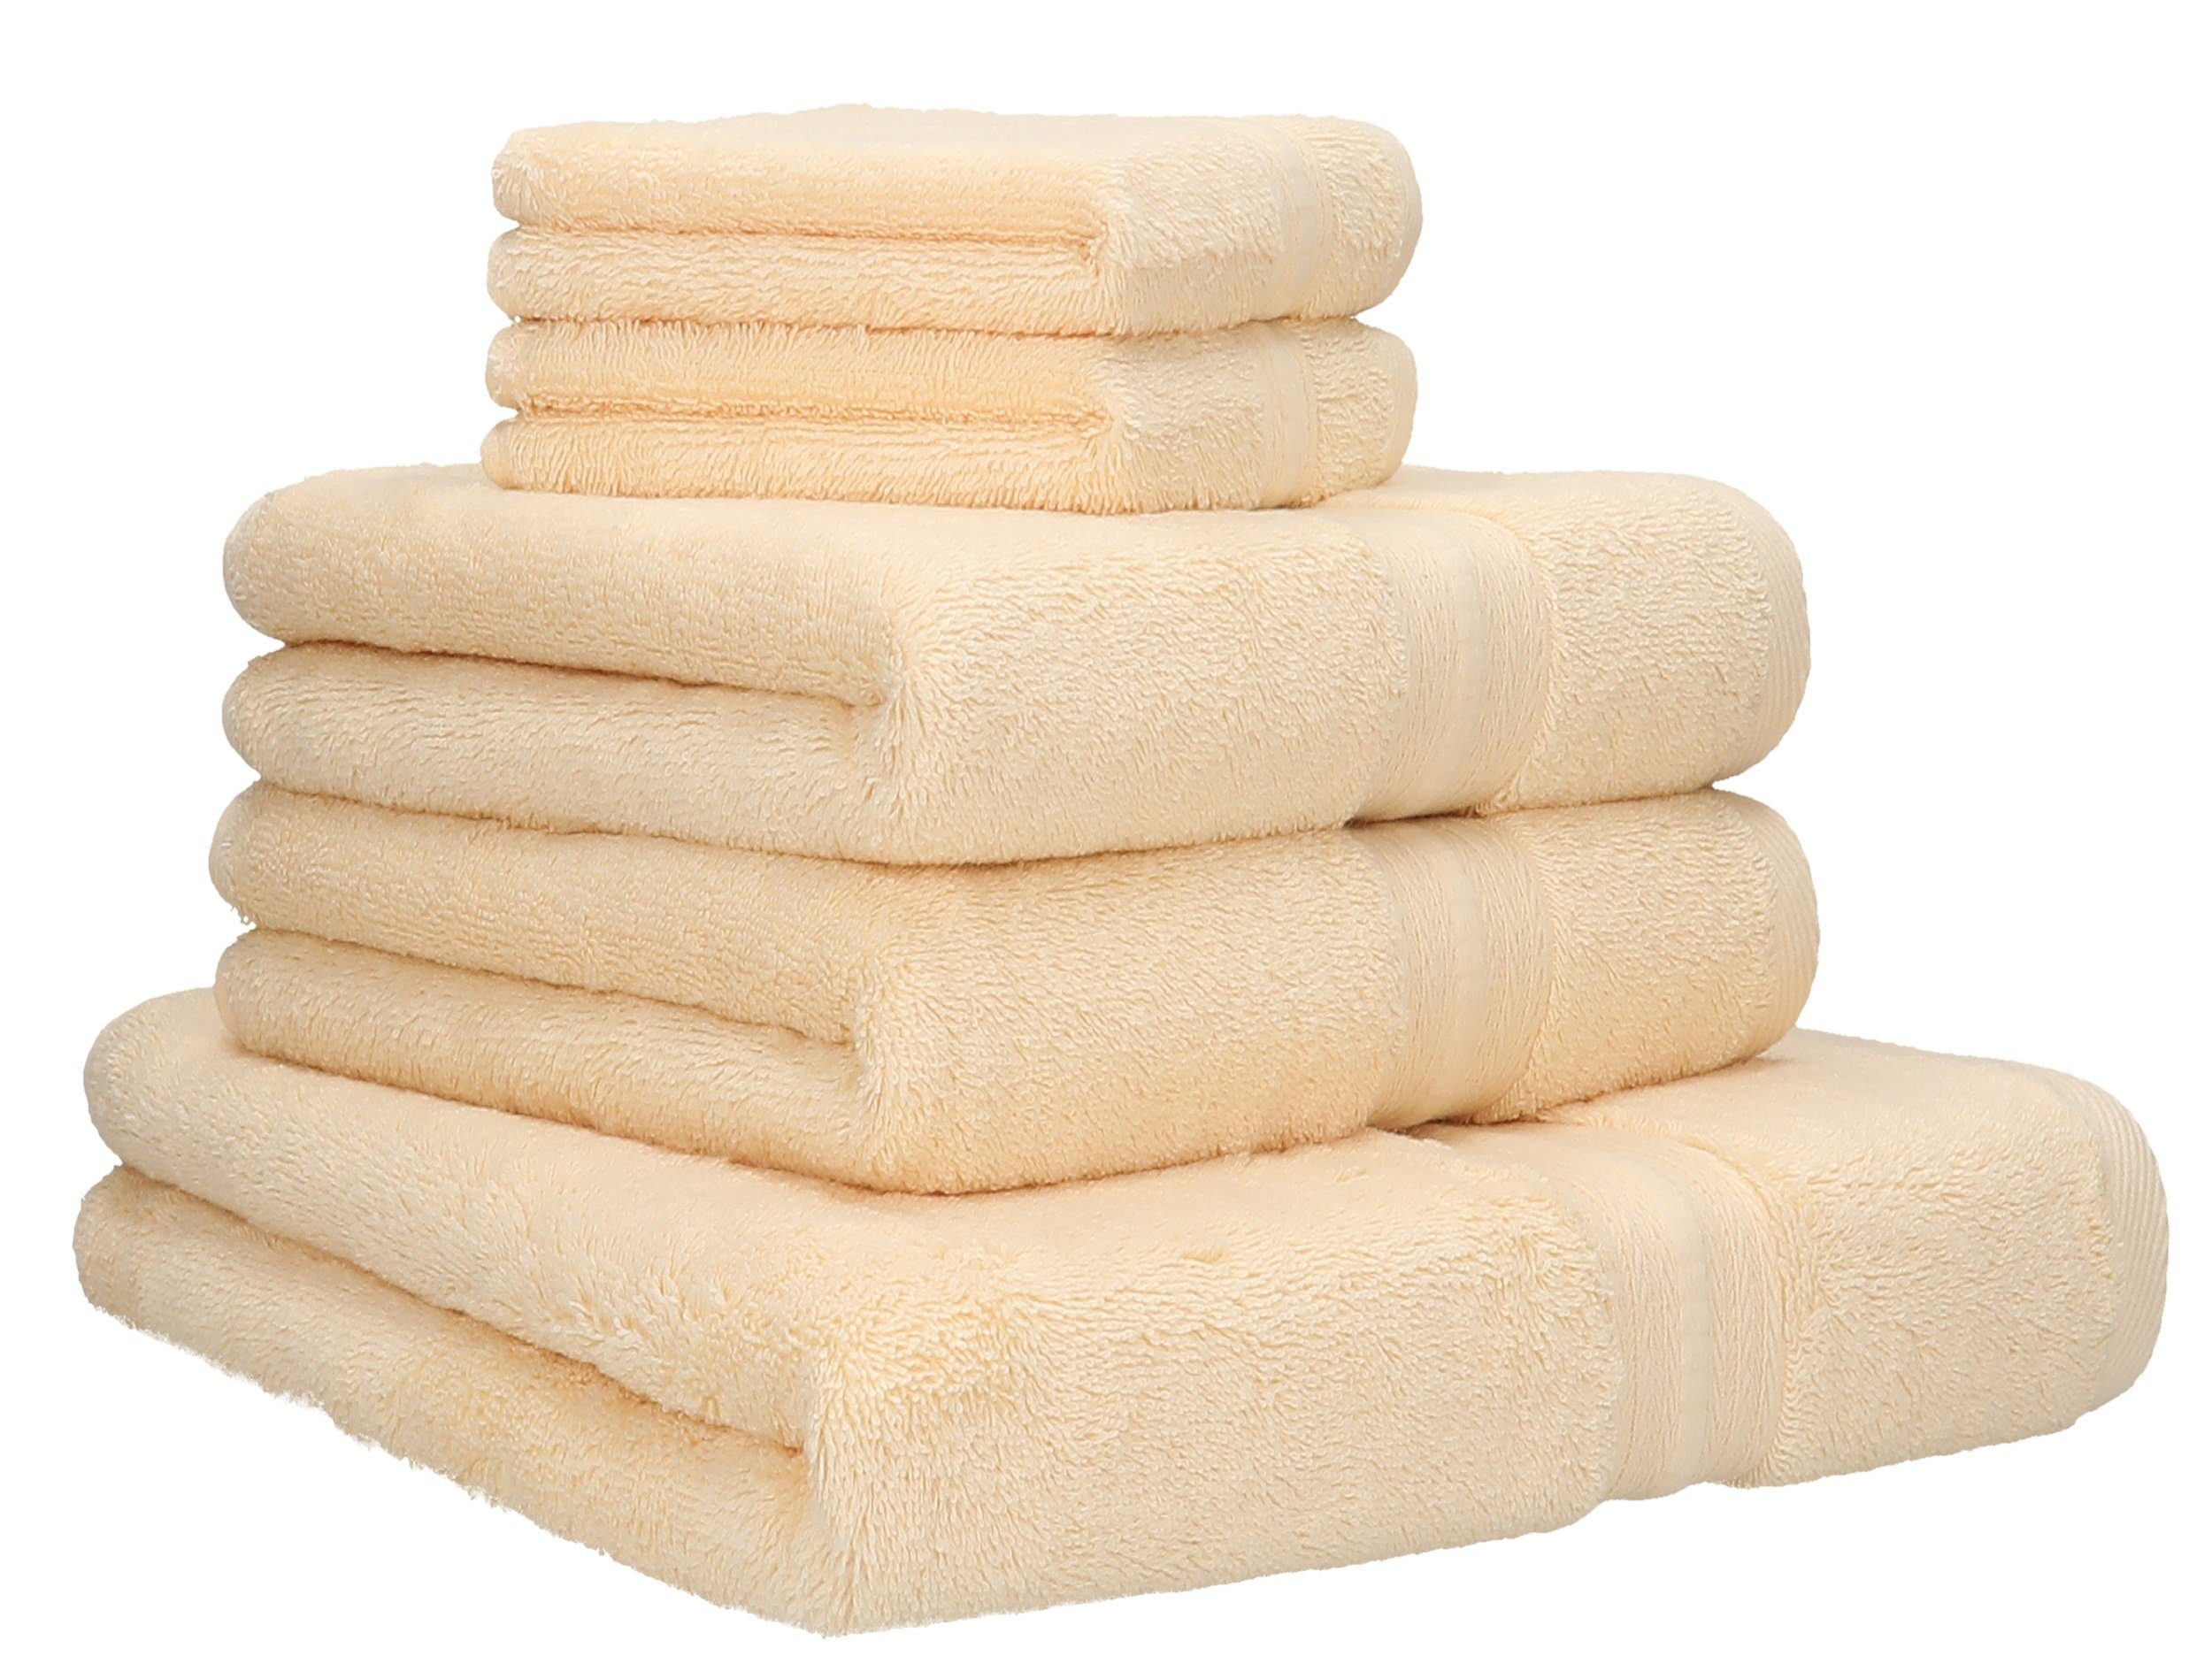 Seiftücher 100% GOLD 5-TLG. Baumwolle Farbe Handtücher Duschtuch Handtuch-Set 1 Qualität 600 g/m² 2 Handtuch Betz 100% Set beige, 2 Baumwolle